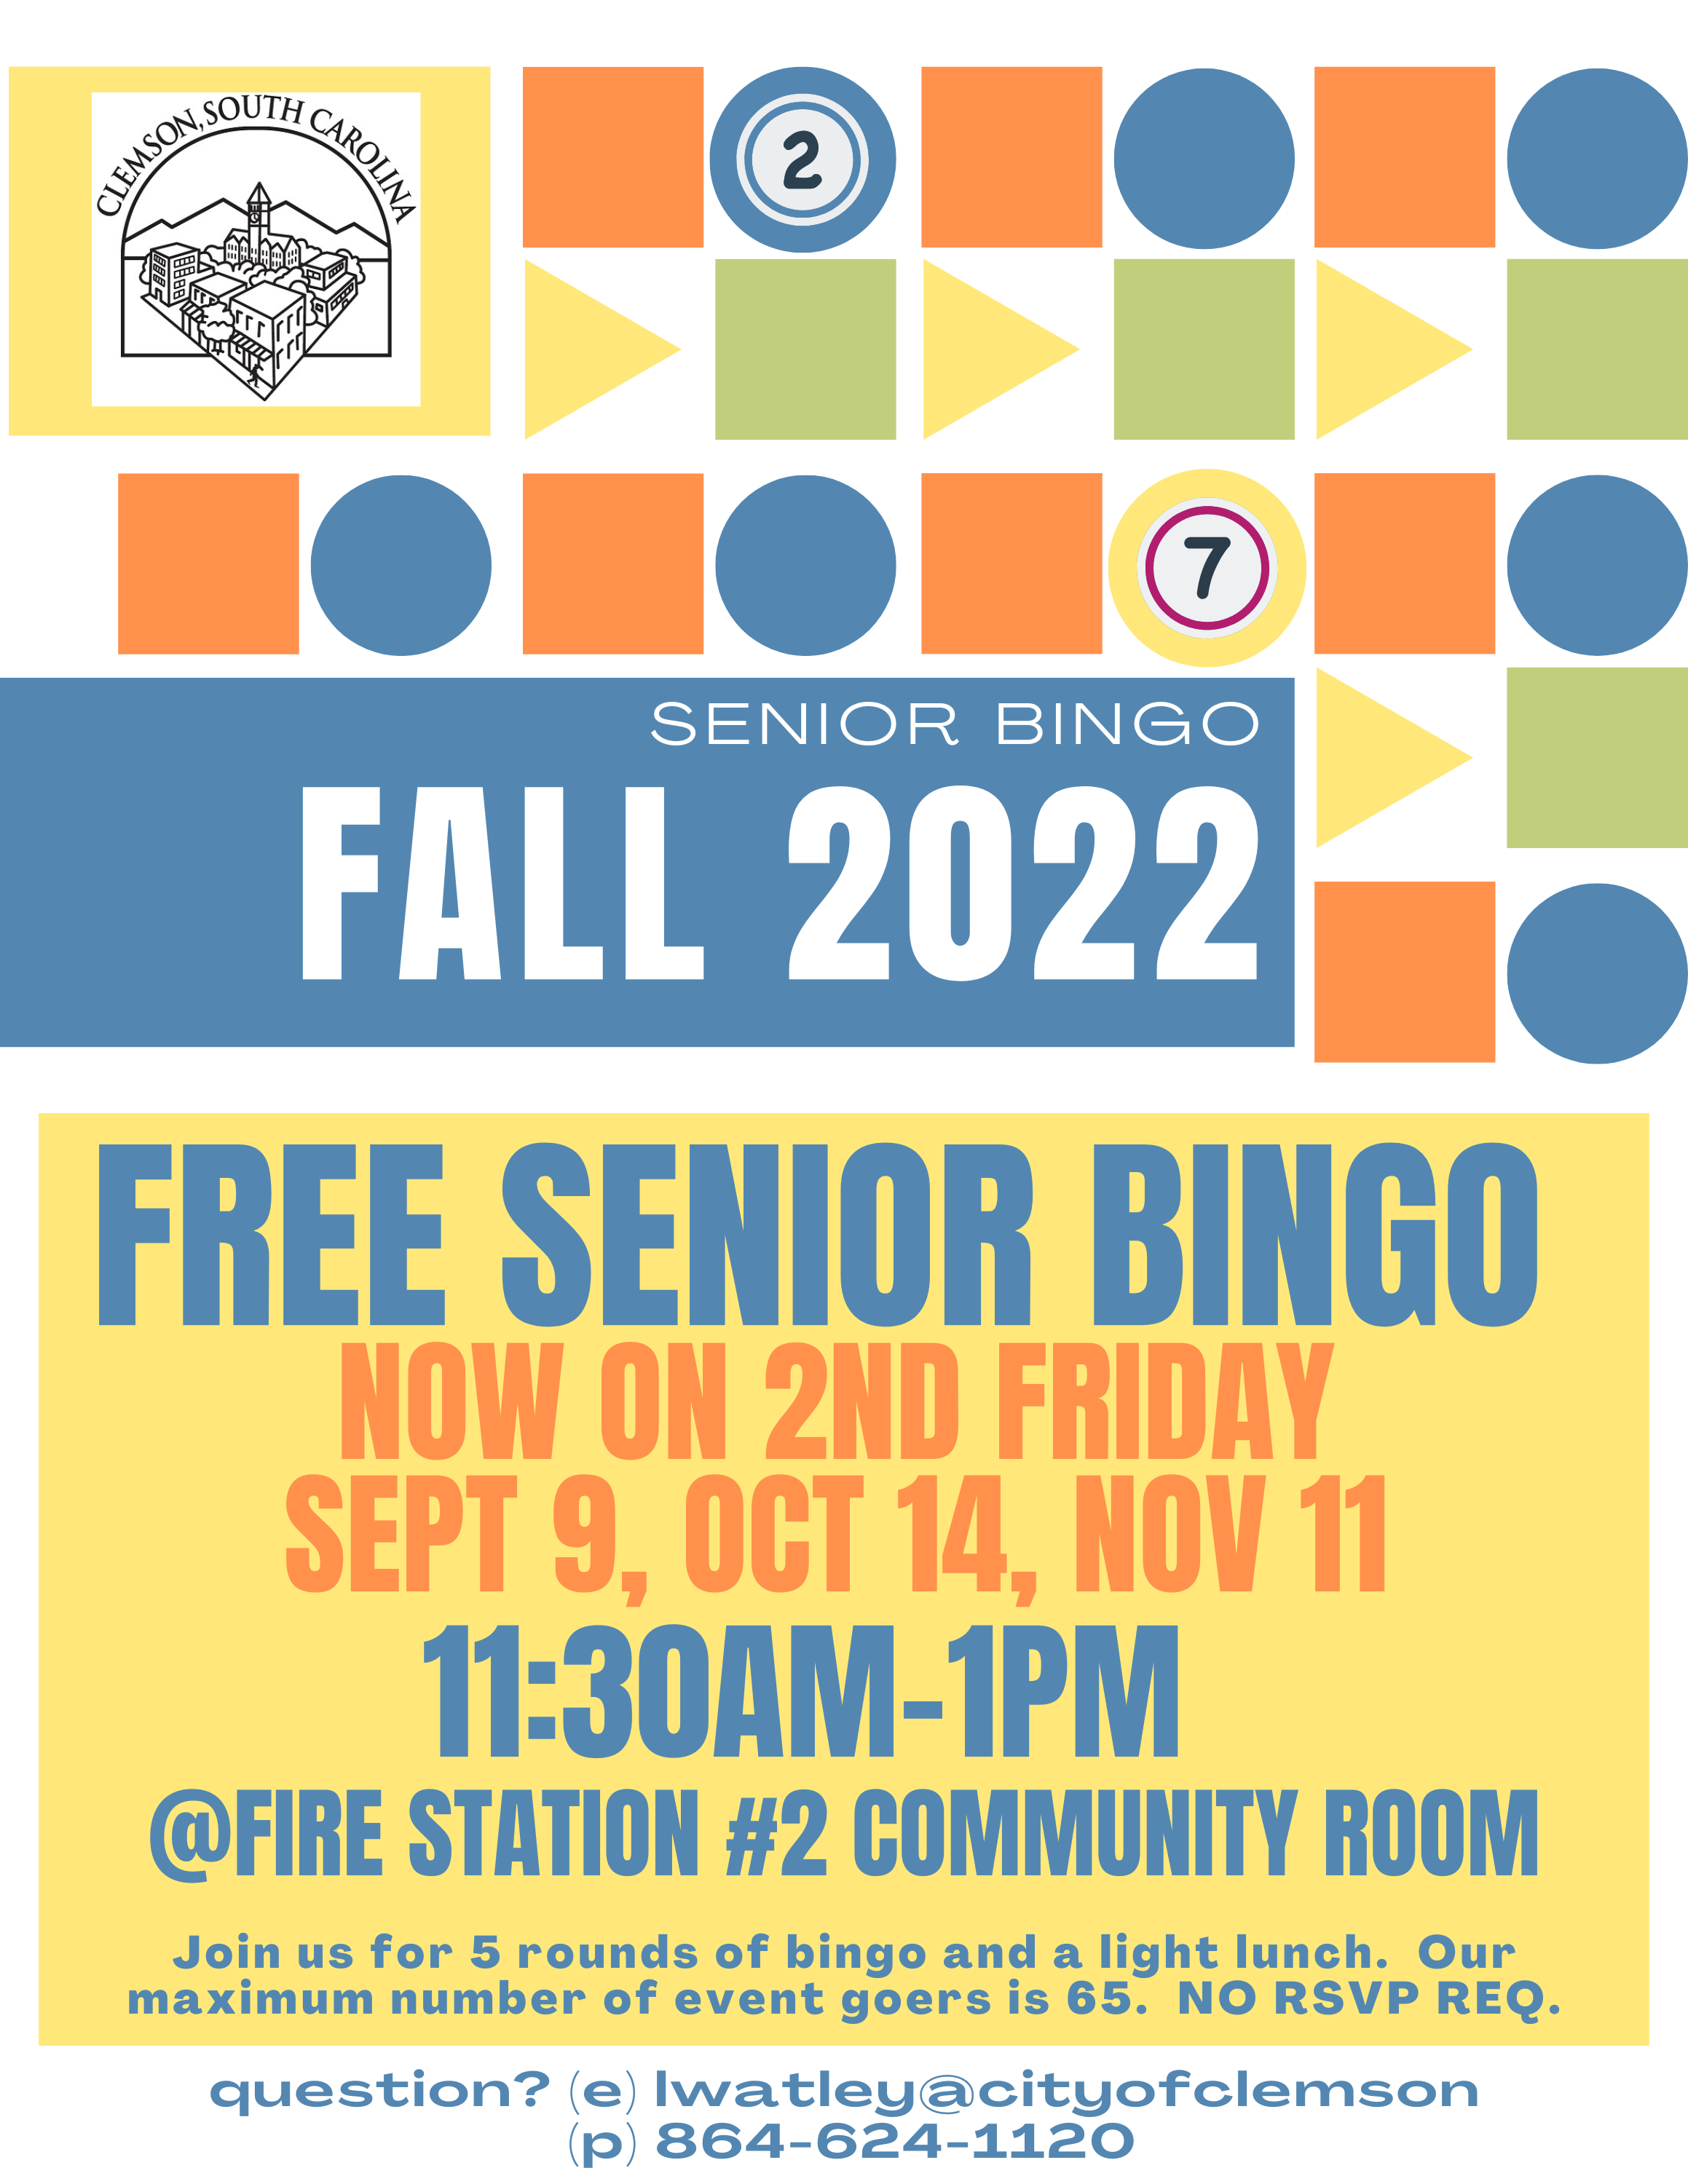 Fall 2022 Senior Bingo Information